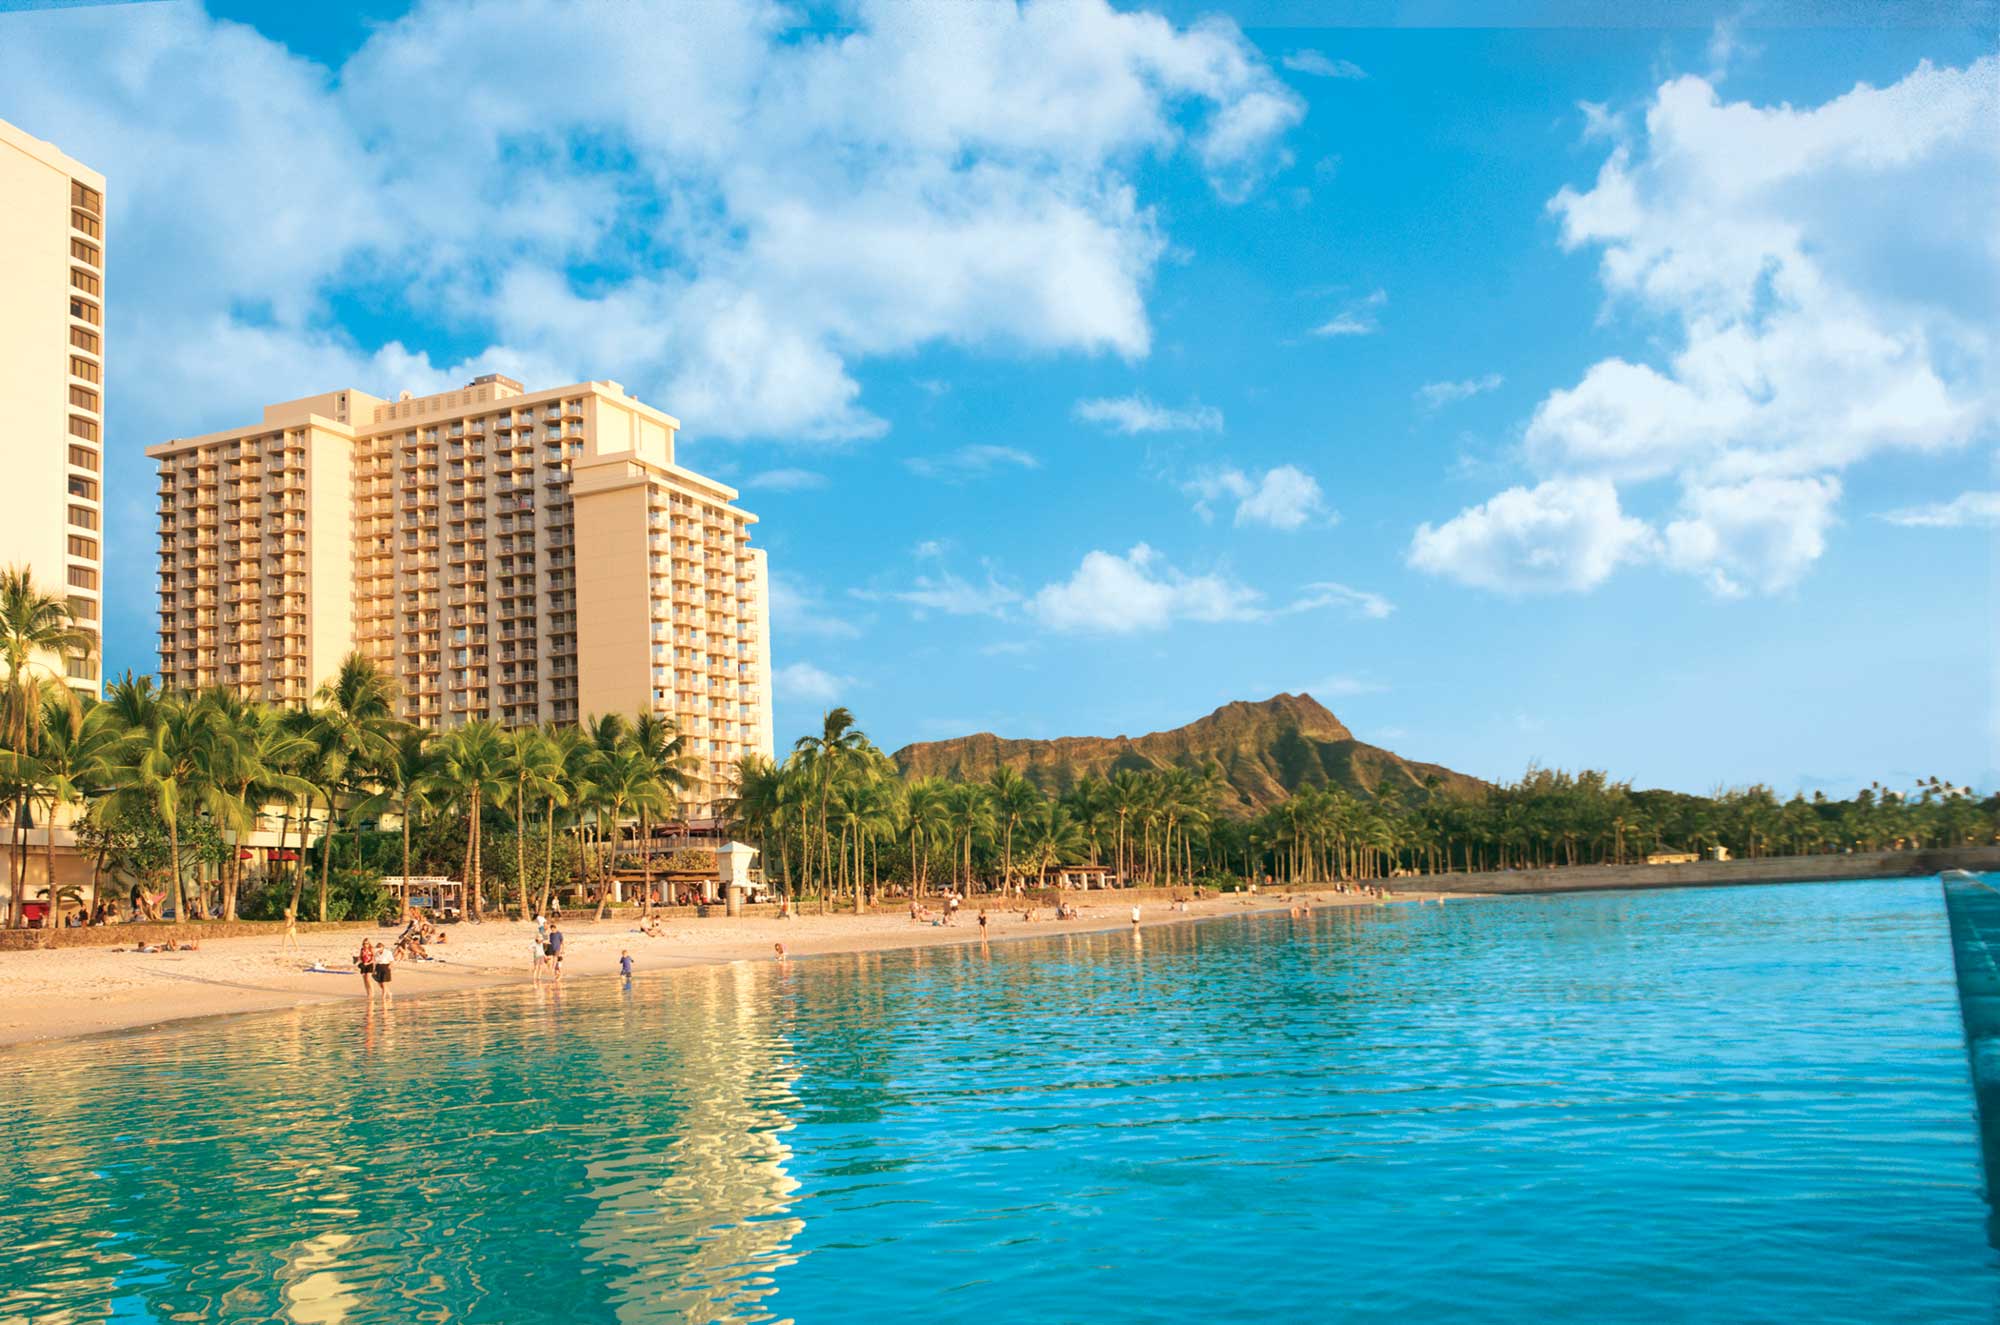 Hawaii island wedding venue: Aston Waikiki Beach Hotel